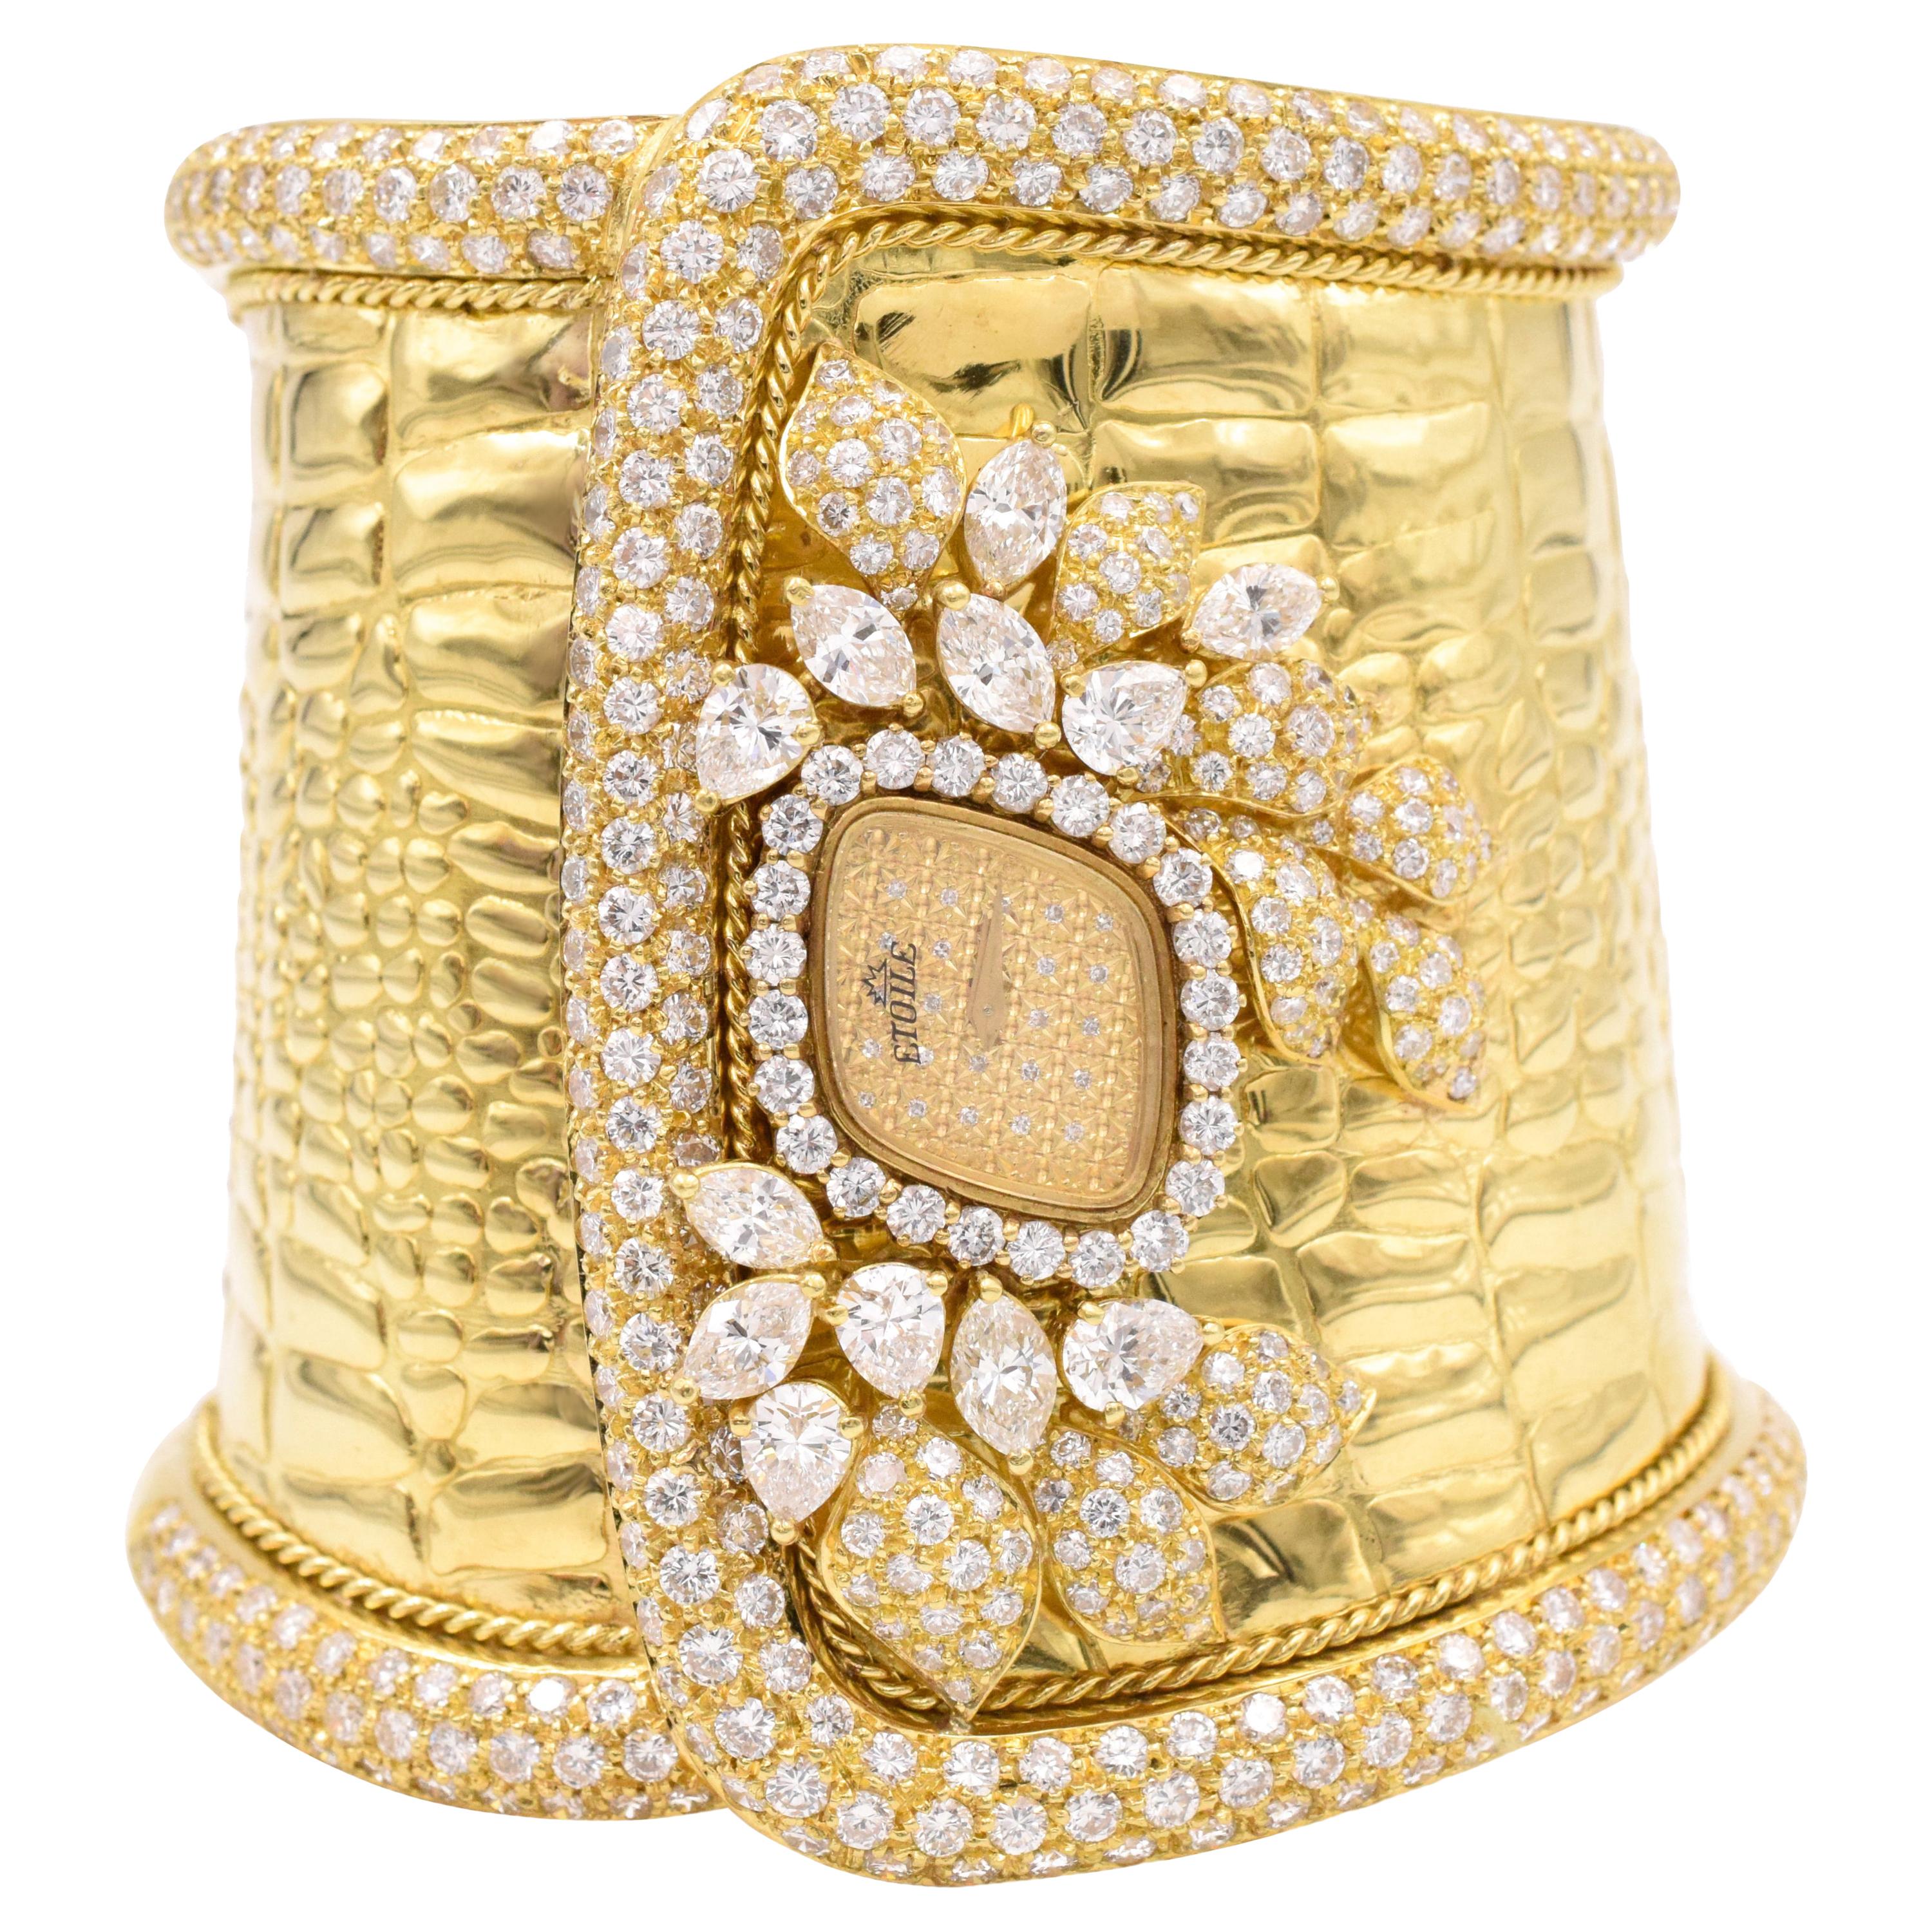 Etoile Diamond Cuff Watch Made in 18 Karat Yellow Gold